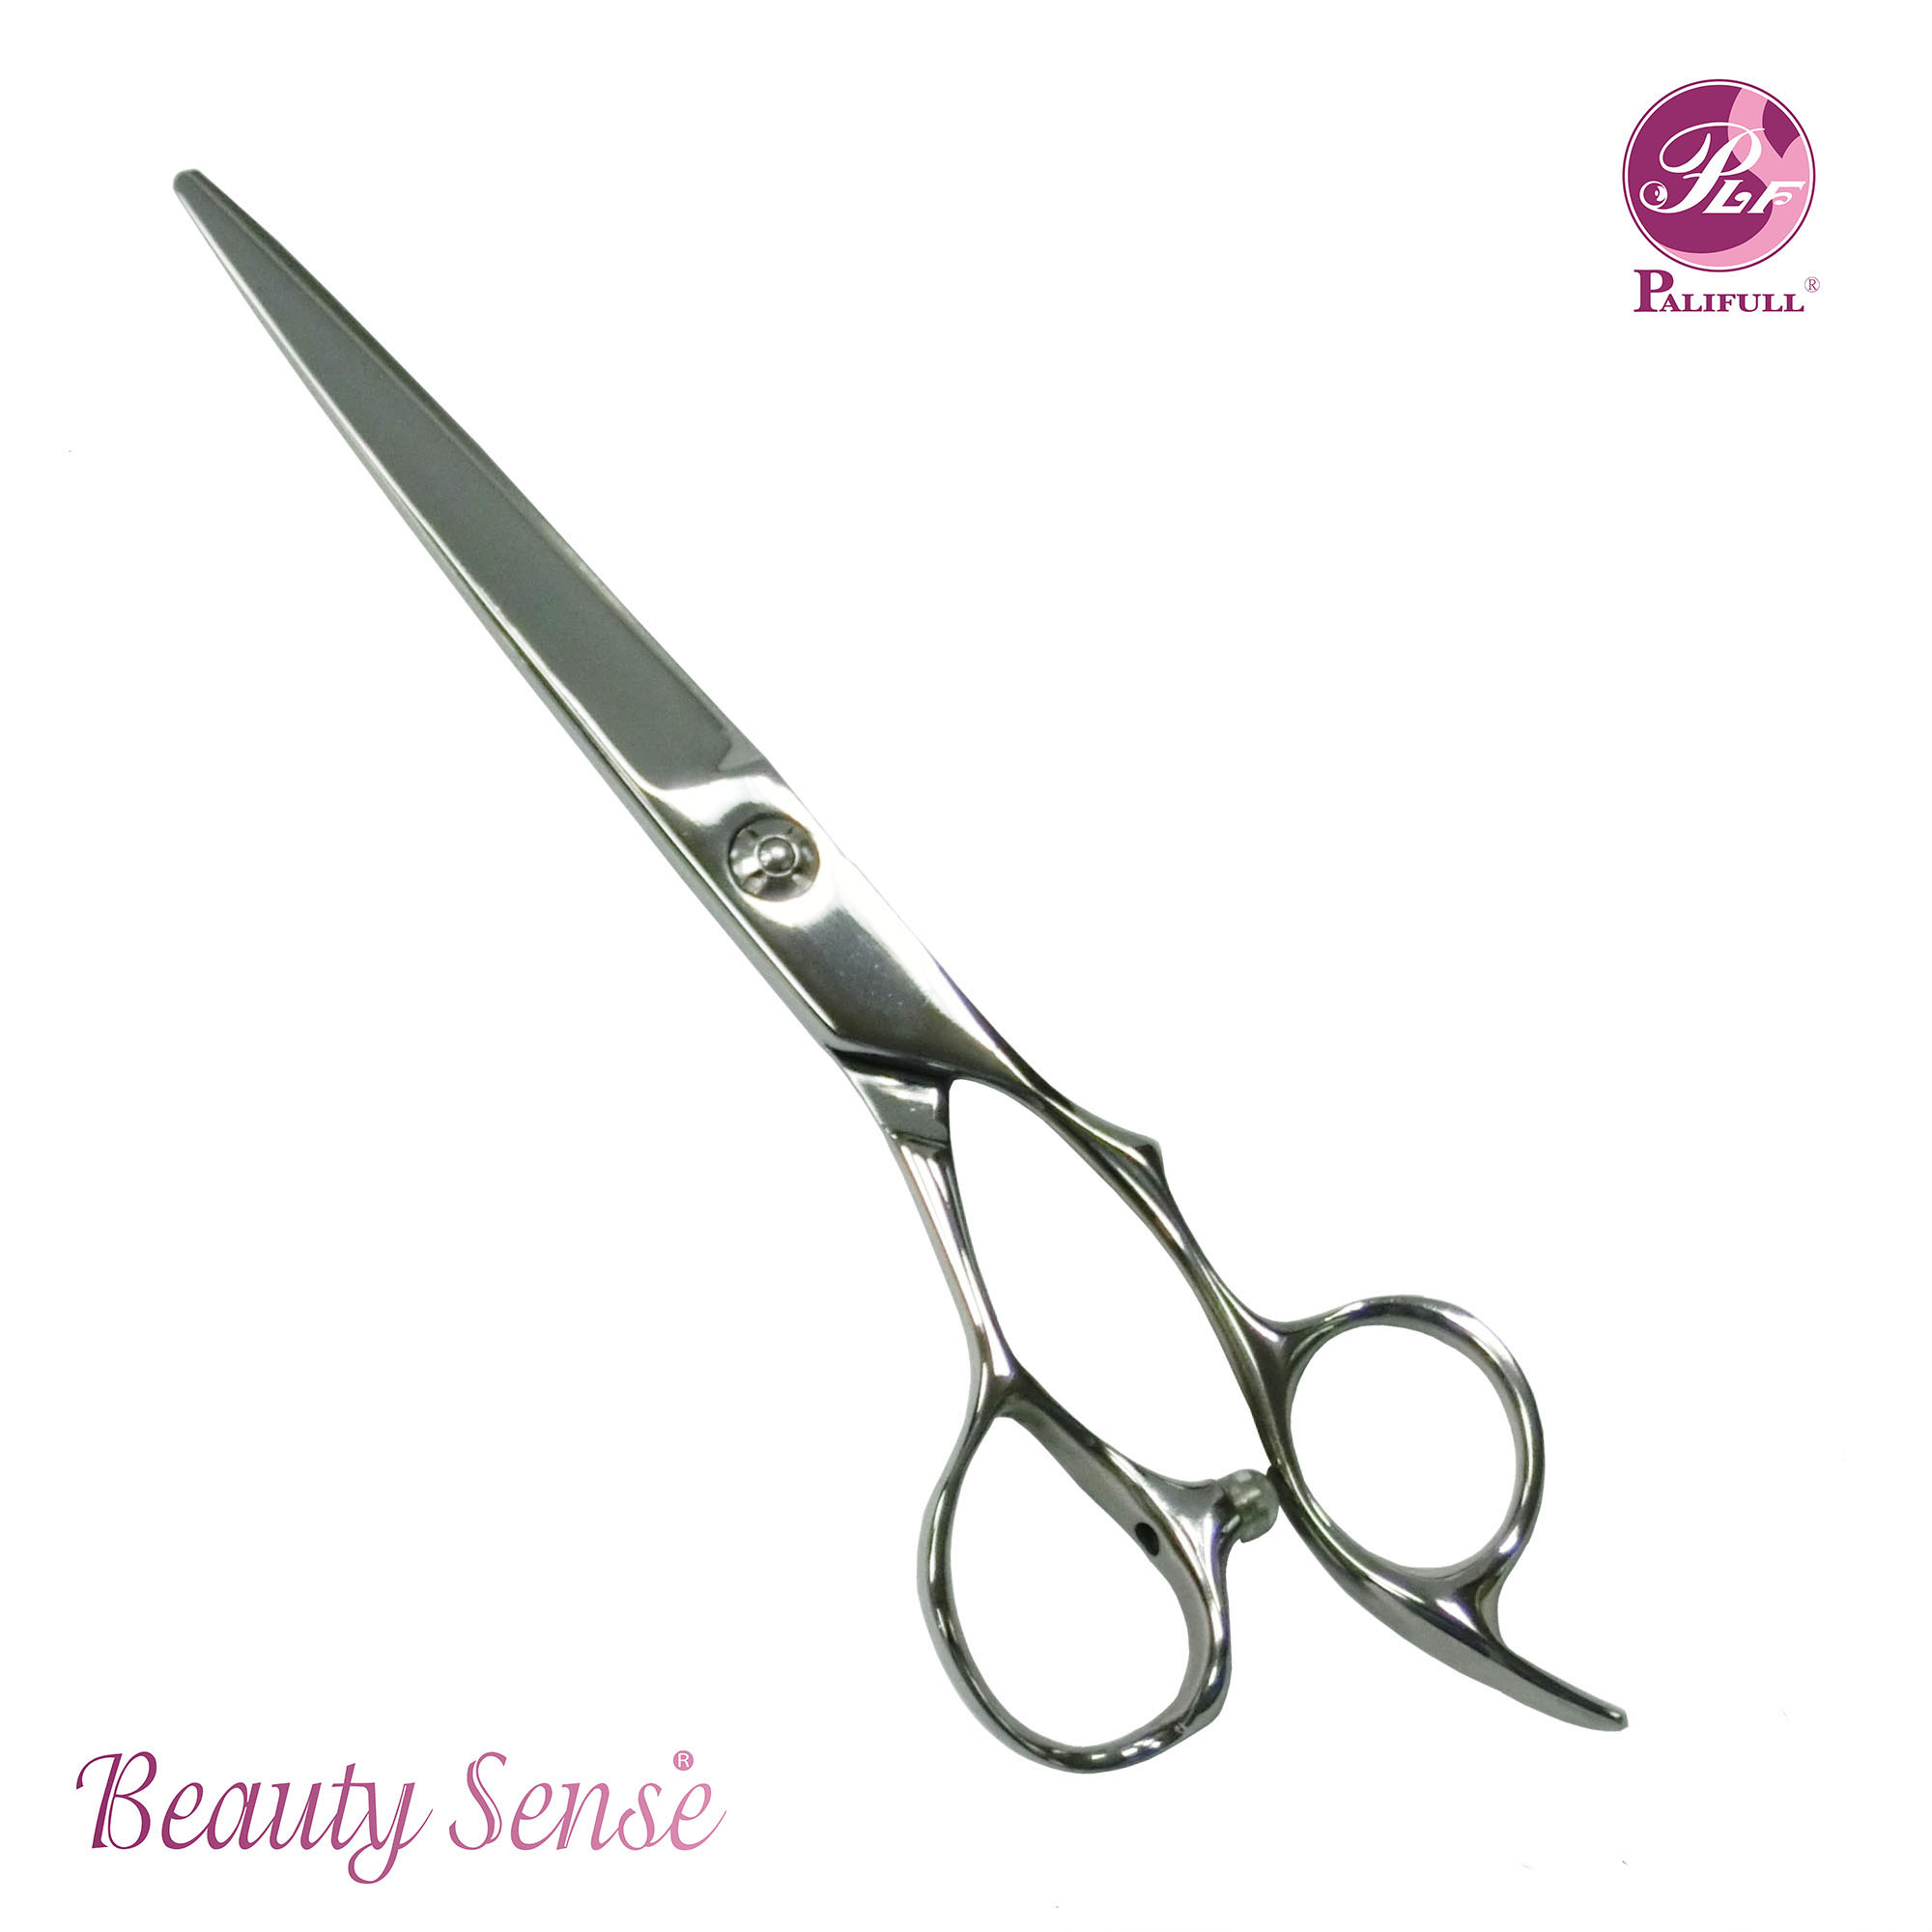 Hair Scissors (PLF-F55P8)